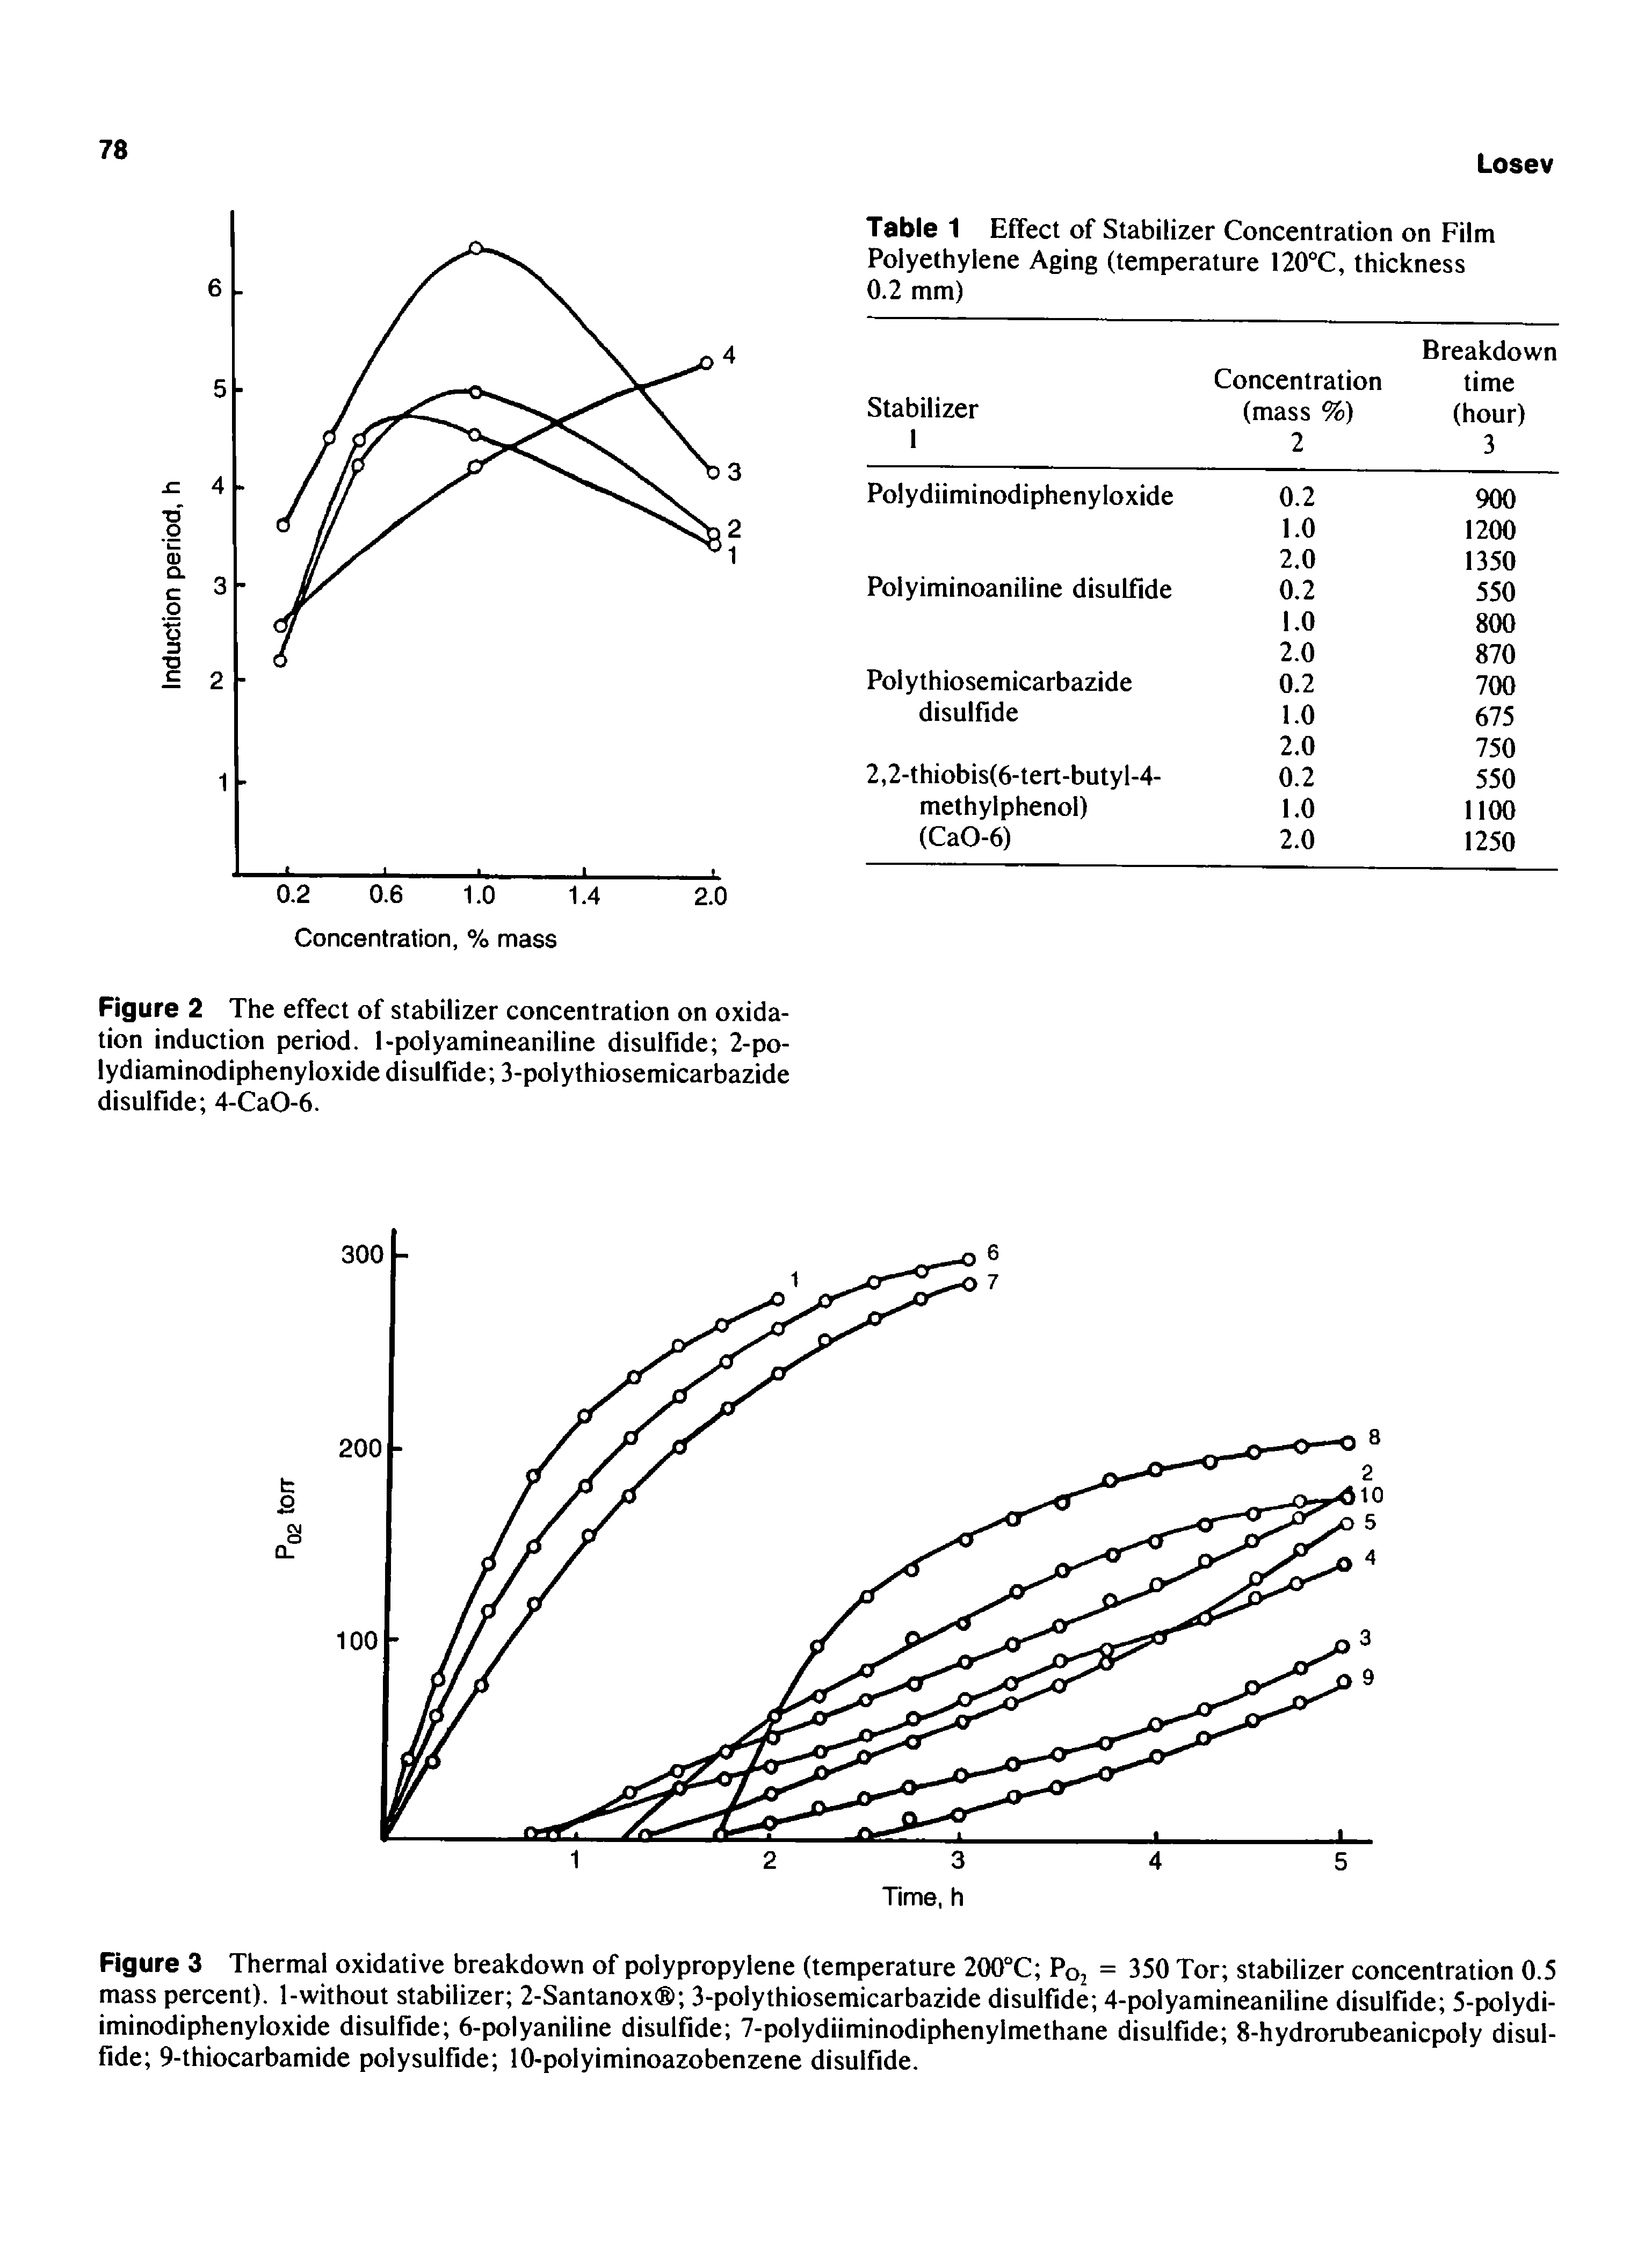 Figure 2 The effect of stabilizer concentration on oxidation induction period. 1-polyamineaniline disulfide 2-po-lydiaminodiphenyloxide disulfide 3-polythiosemicarbazide disulfide 4-CaO-6.